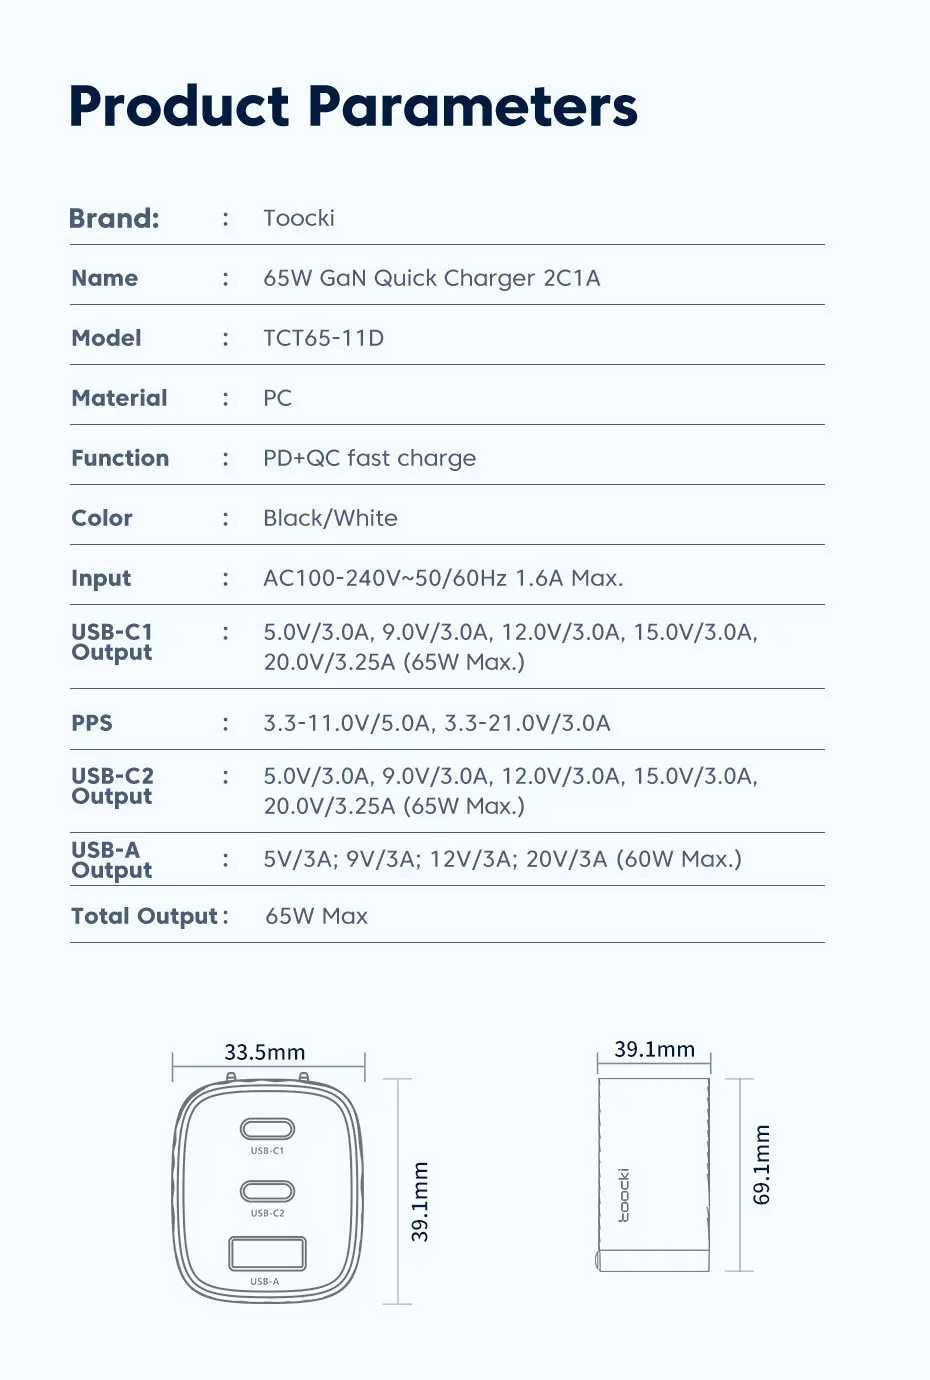 Швидка зарядка Toocki 65W GaN для Macbook, iPhone, Samsung, Xiaomi